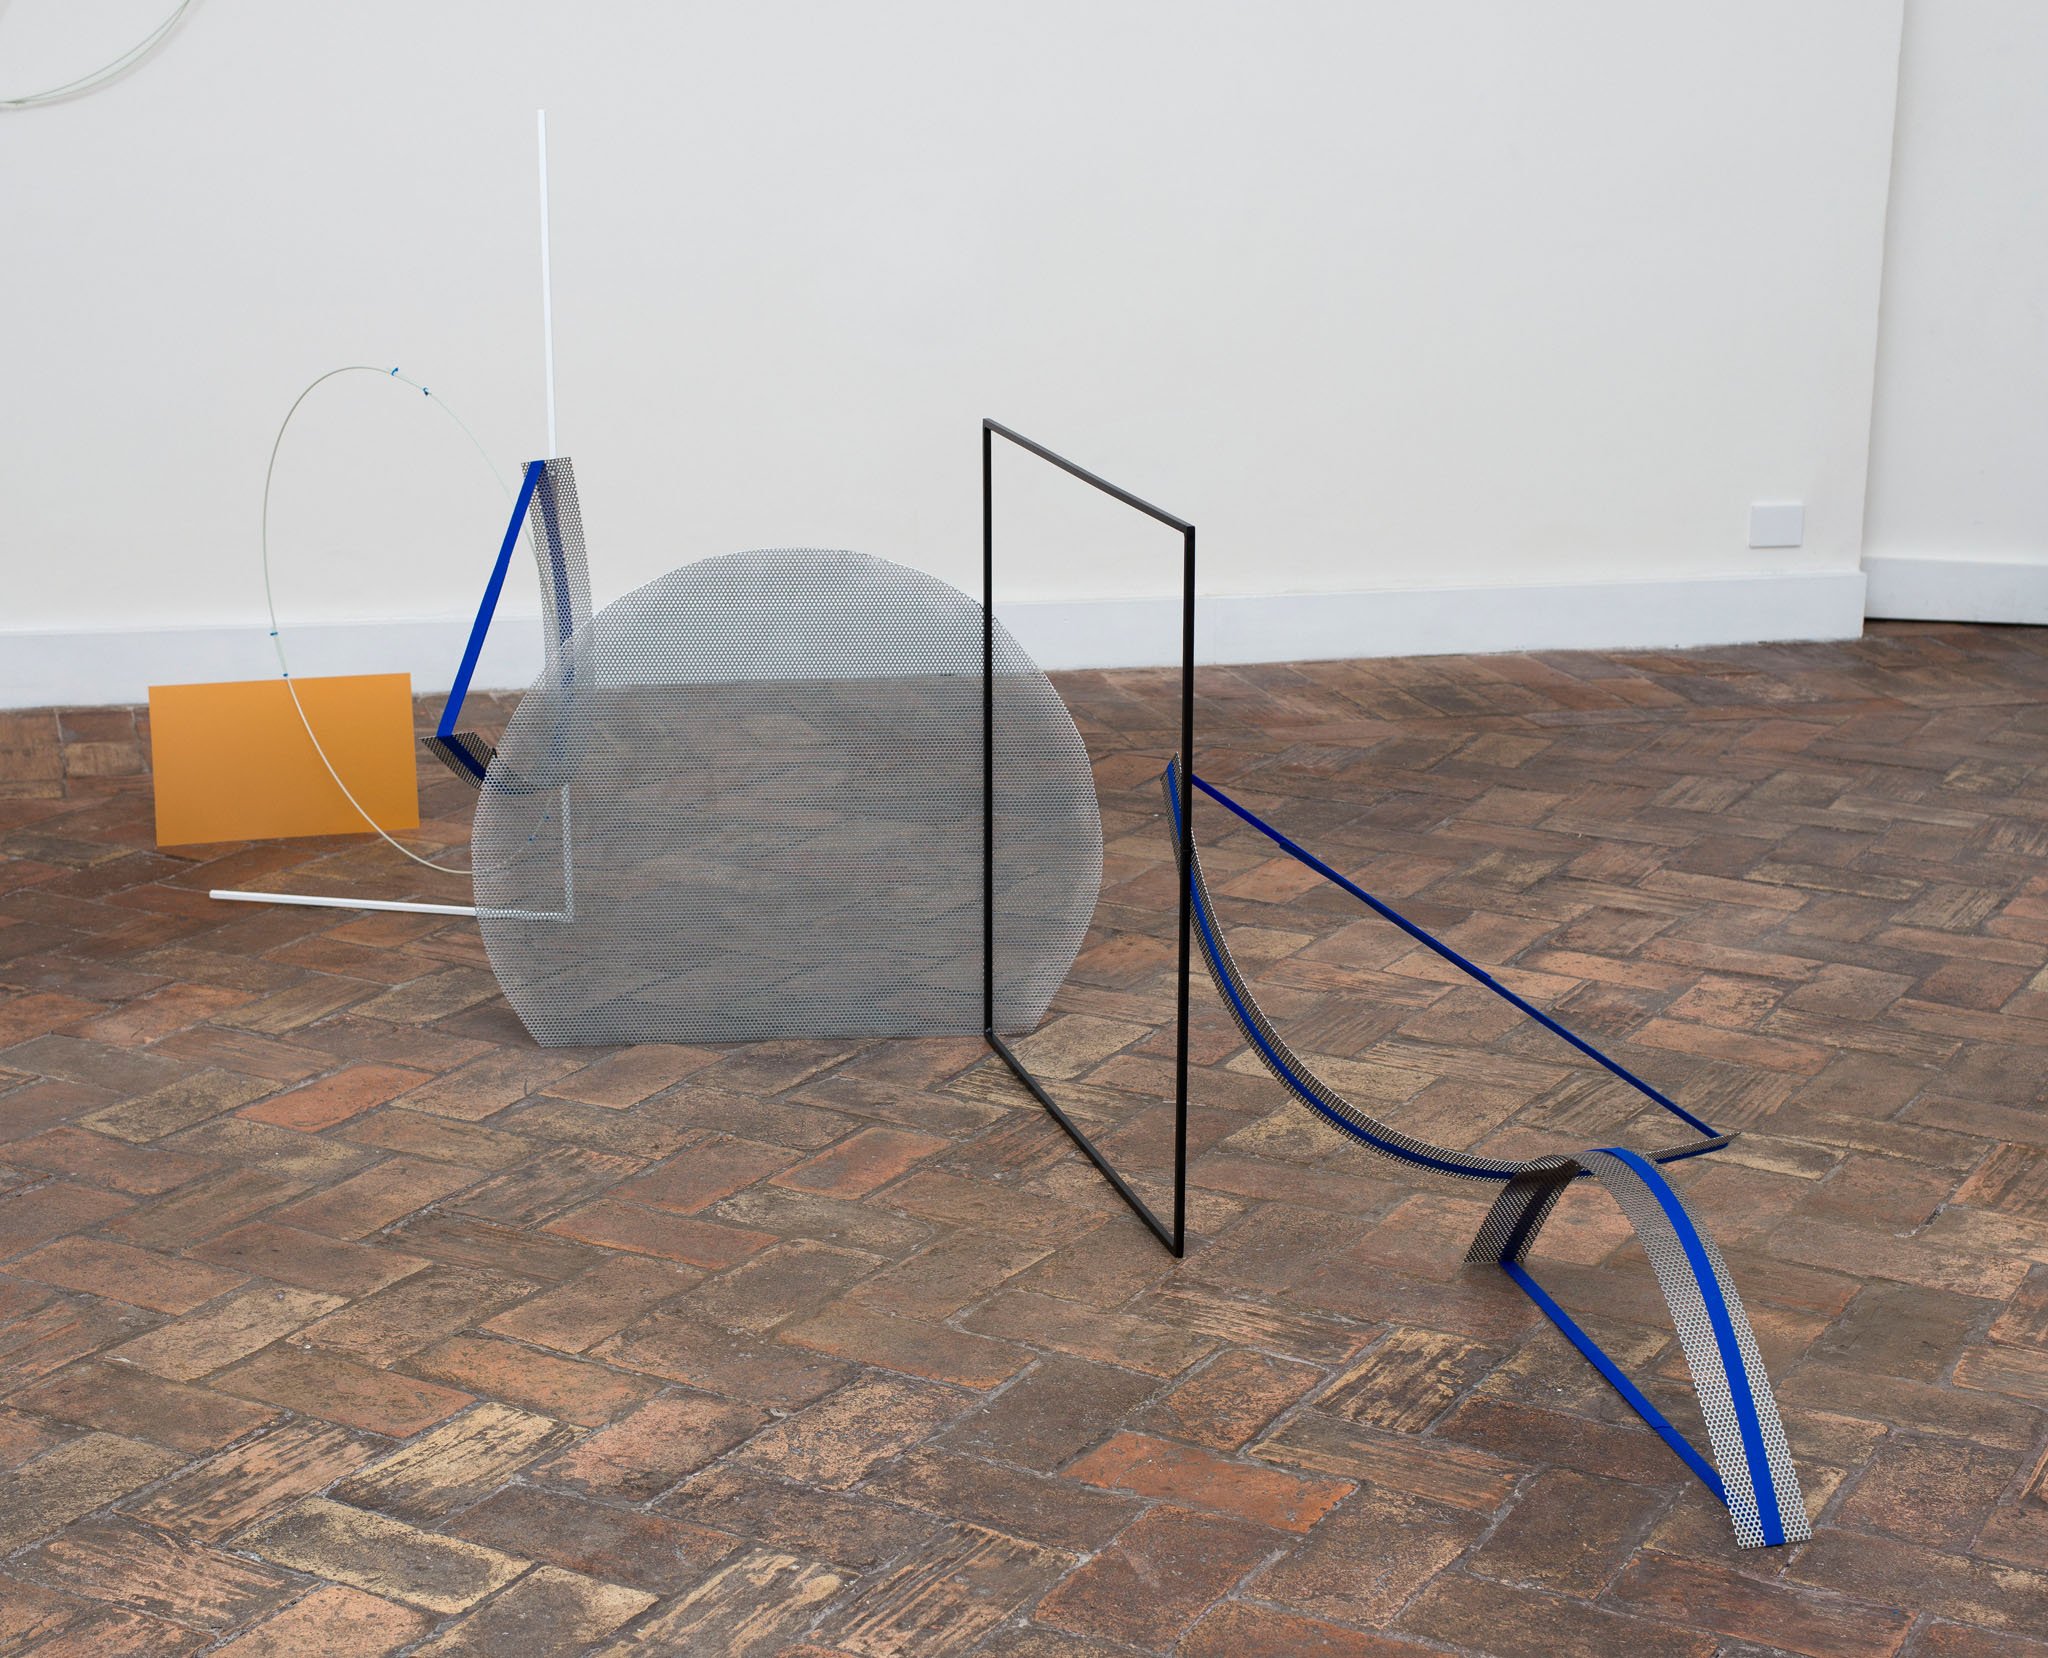 Alice Cattaneo, 'Untitled', 2015, Iron, paint, fiberglass, cable ties, plastic, velcro 140 x 300 x 150 cm .ca. Courtesy Galleria Marie-Laure. Photo: Giorgio Benni.